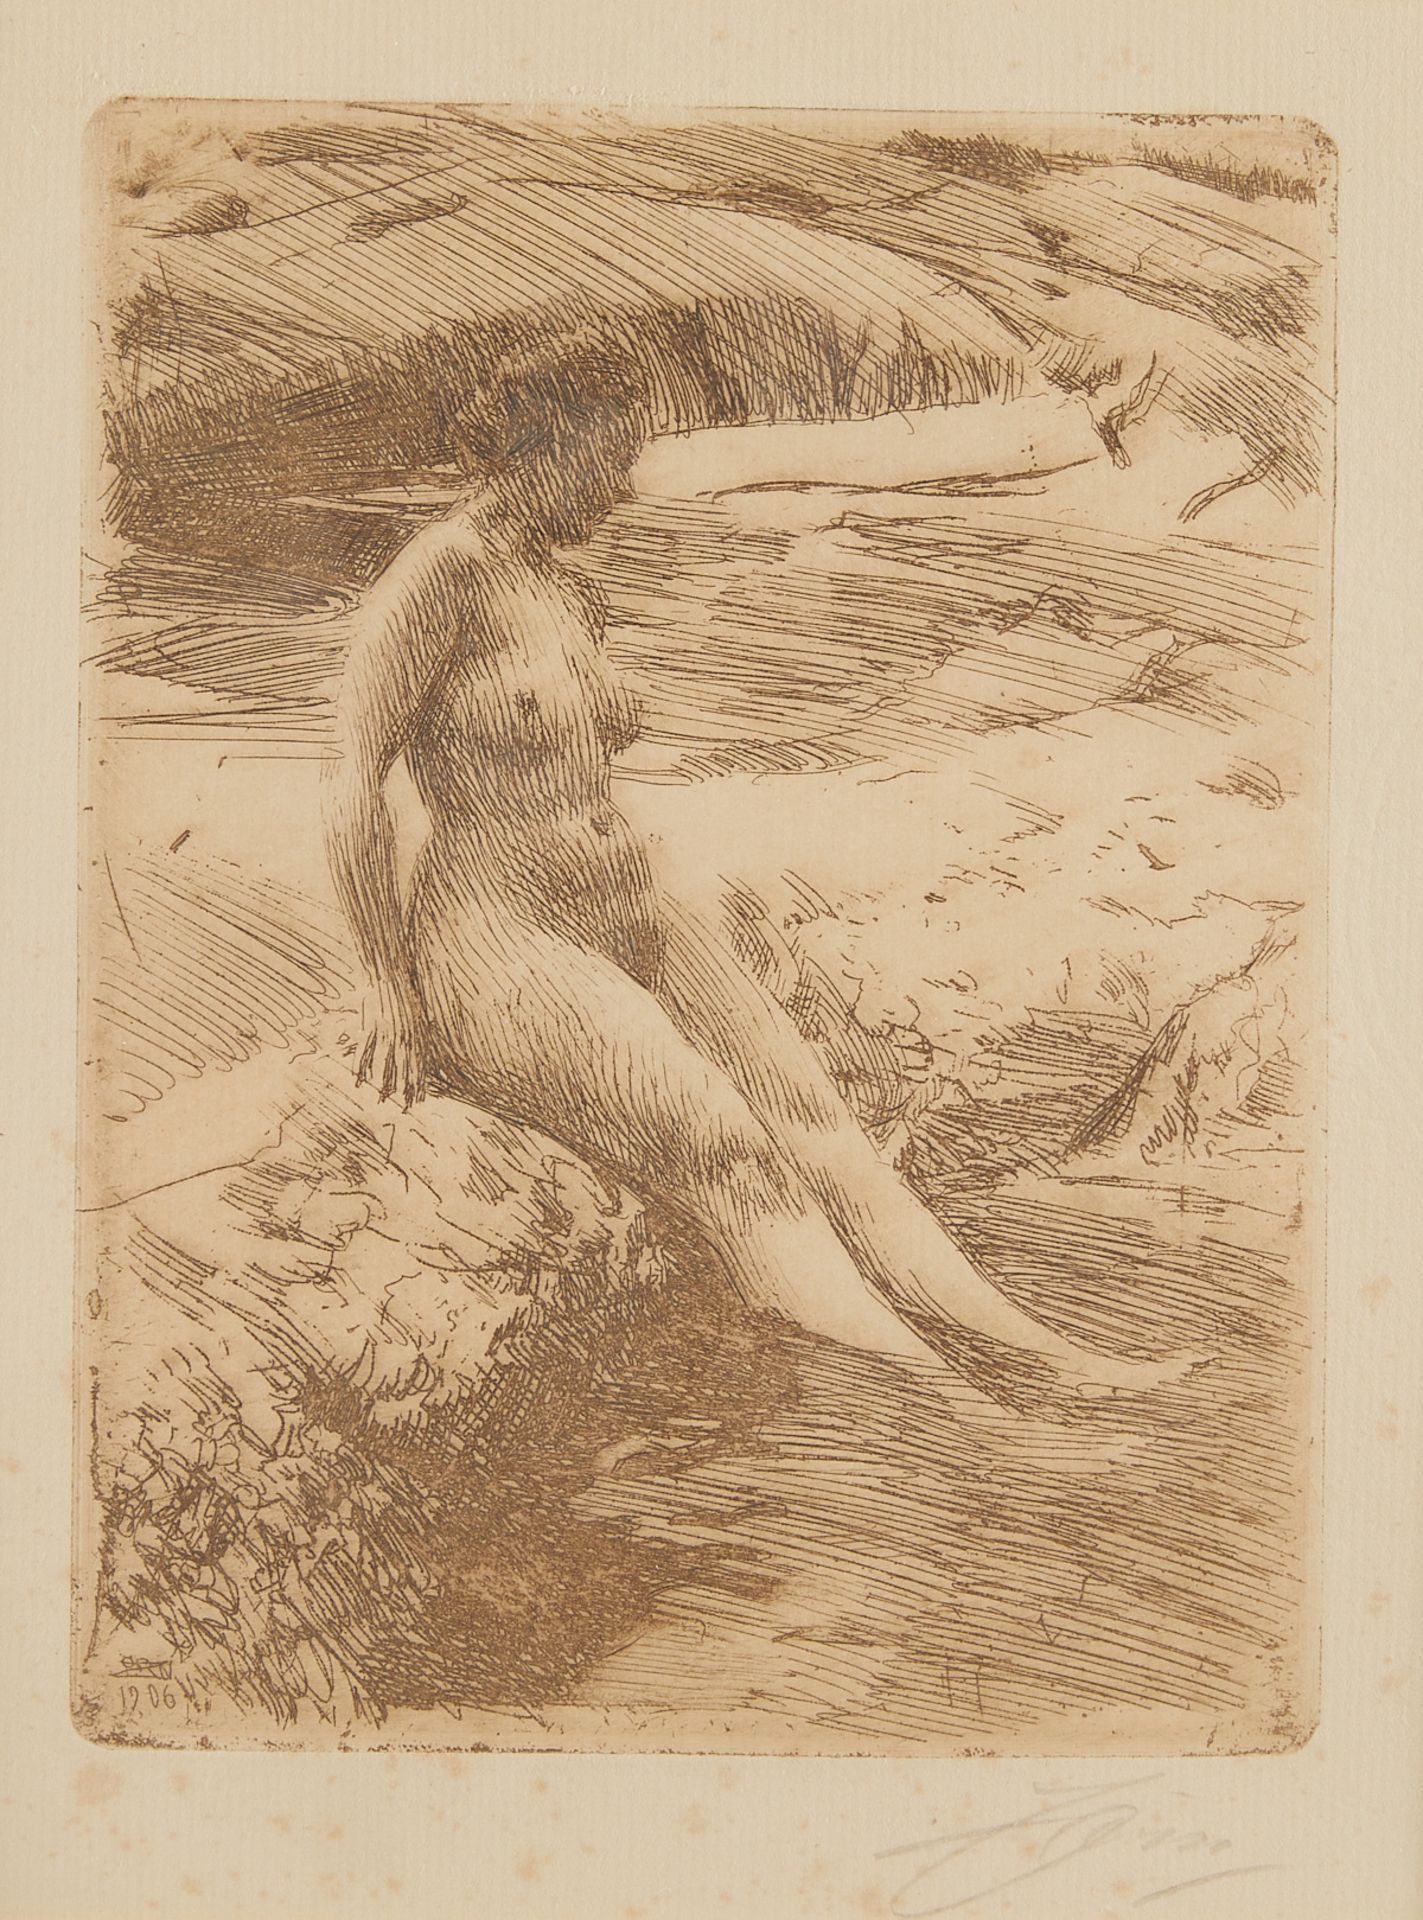 Anders Zorn "Sandhamn" Etching 1906